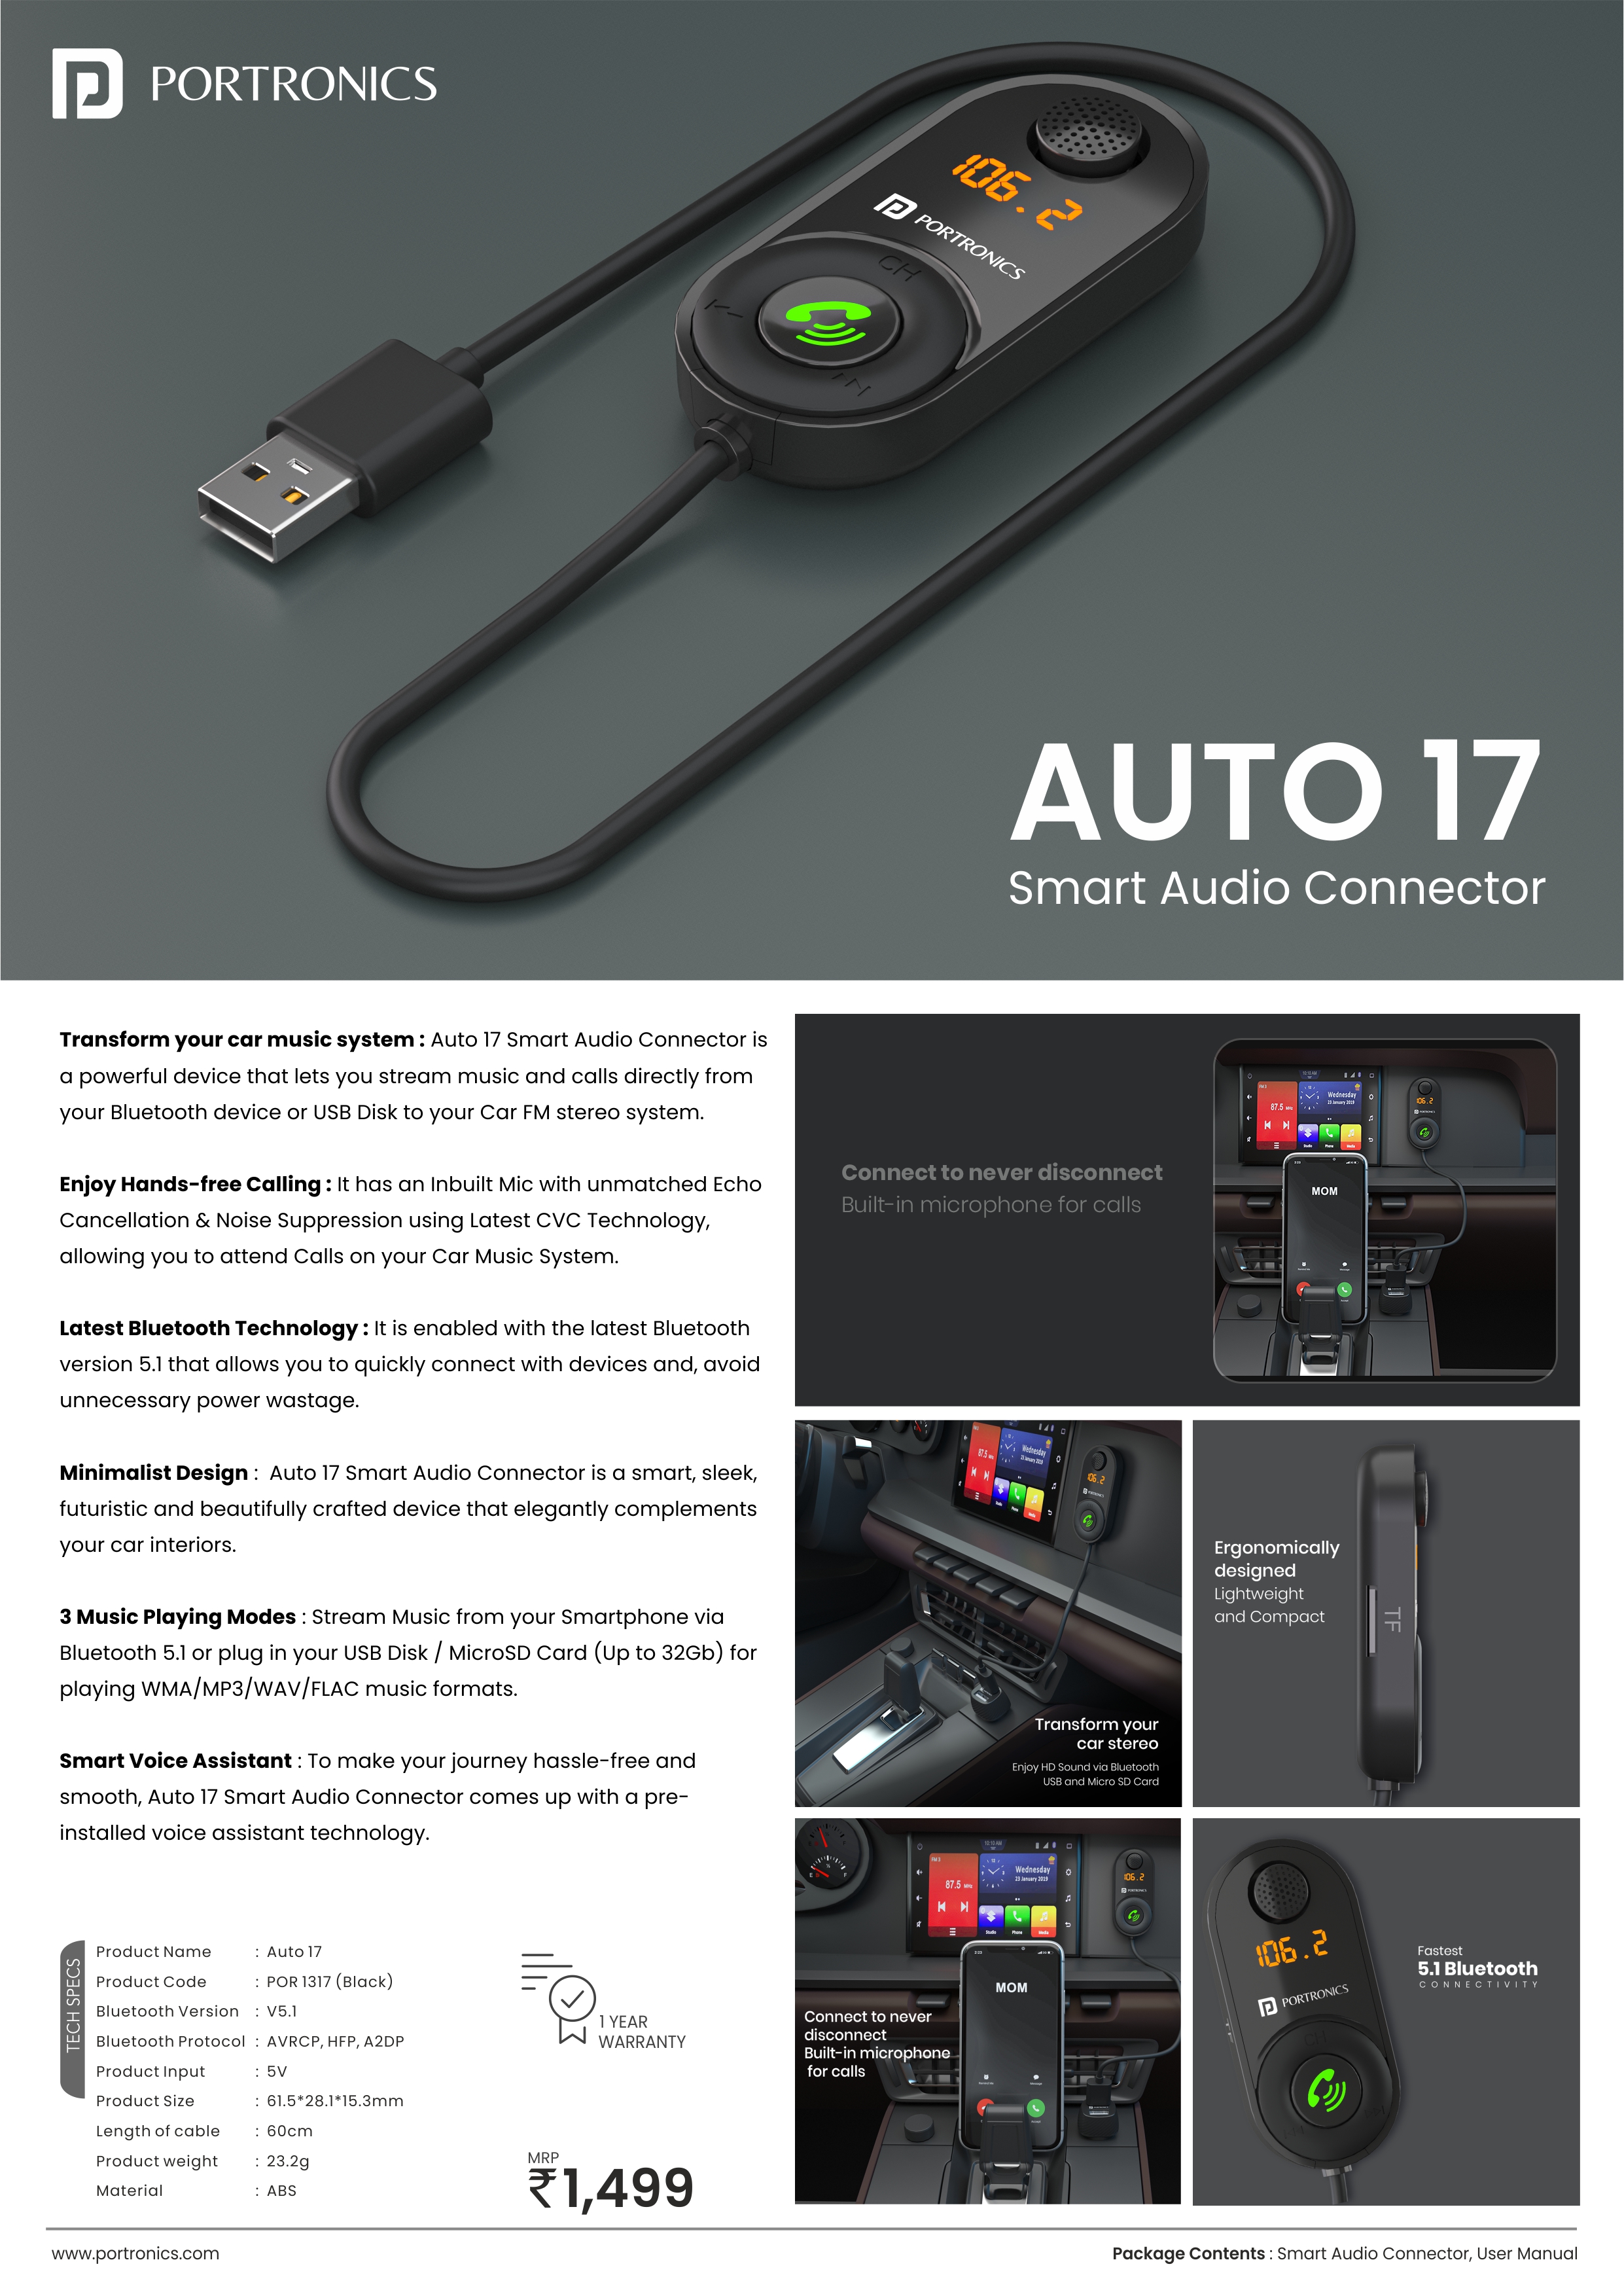 Portronics Auto 17 - Smart Audio Connector